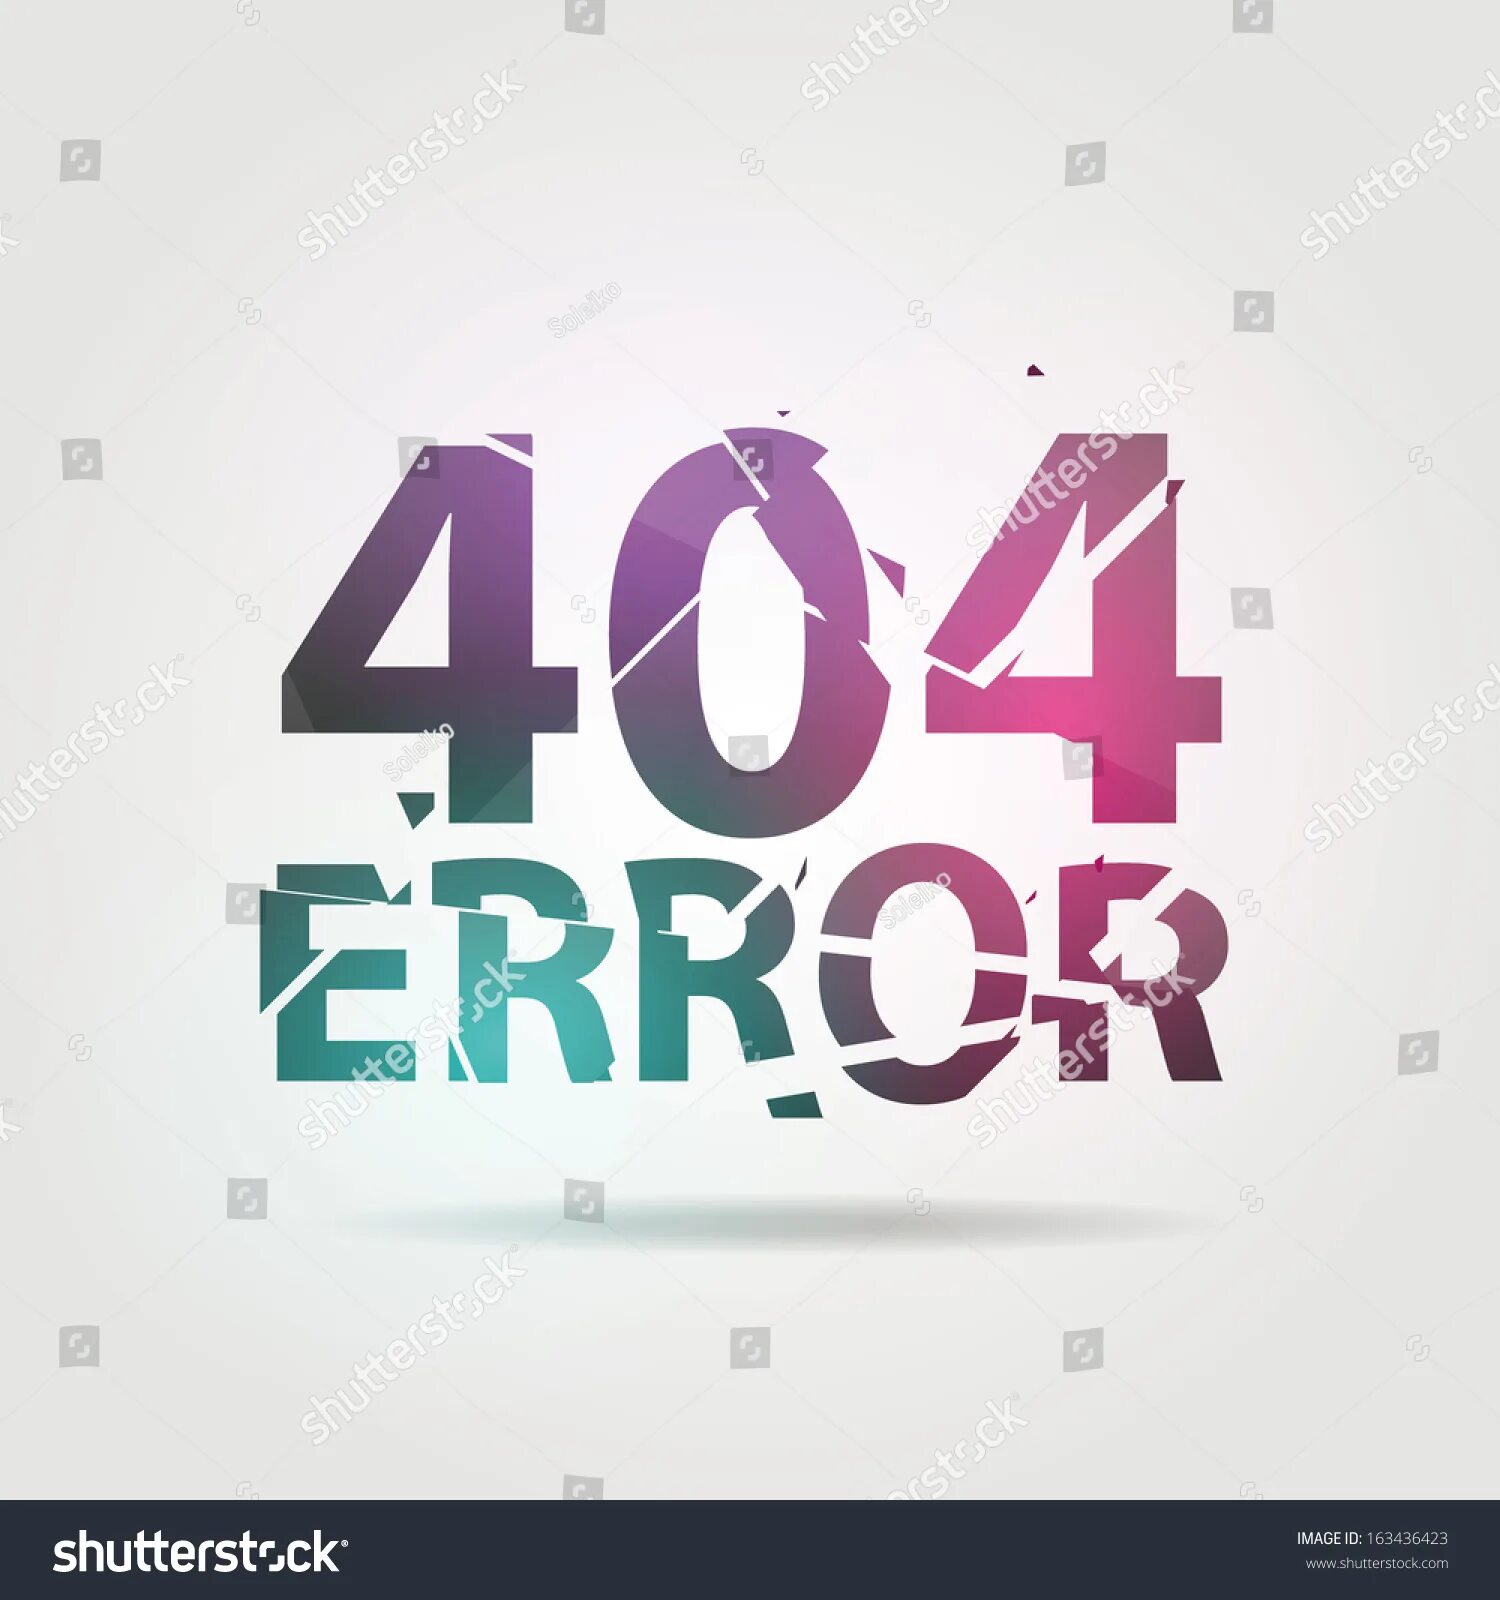 Https 404 error. 404 Not found. Error 404. Ошибка 404 арт. 404 Аватарка.